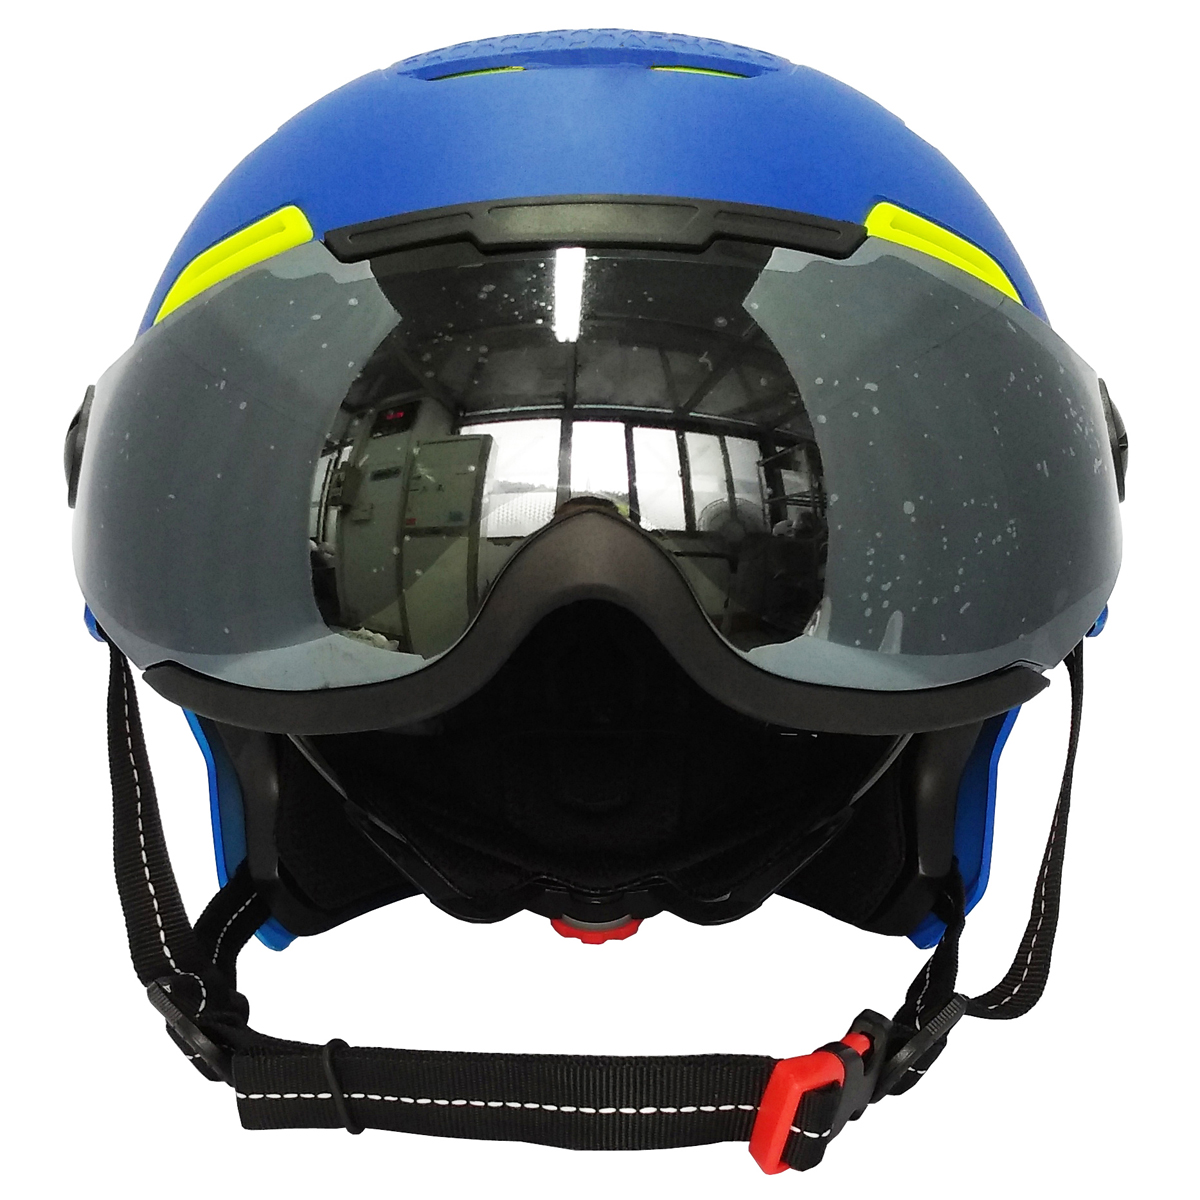 E1-12G E-Bike Helmet